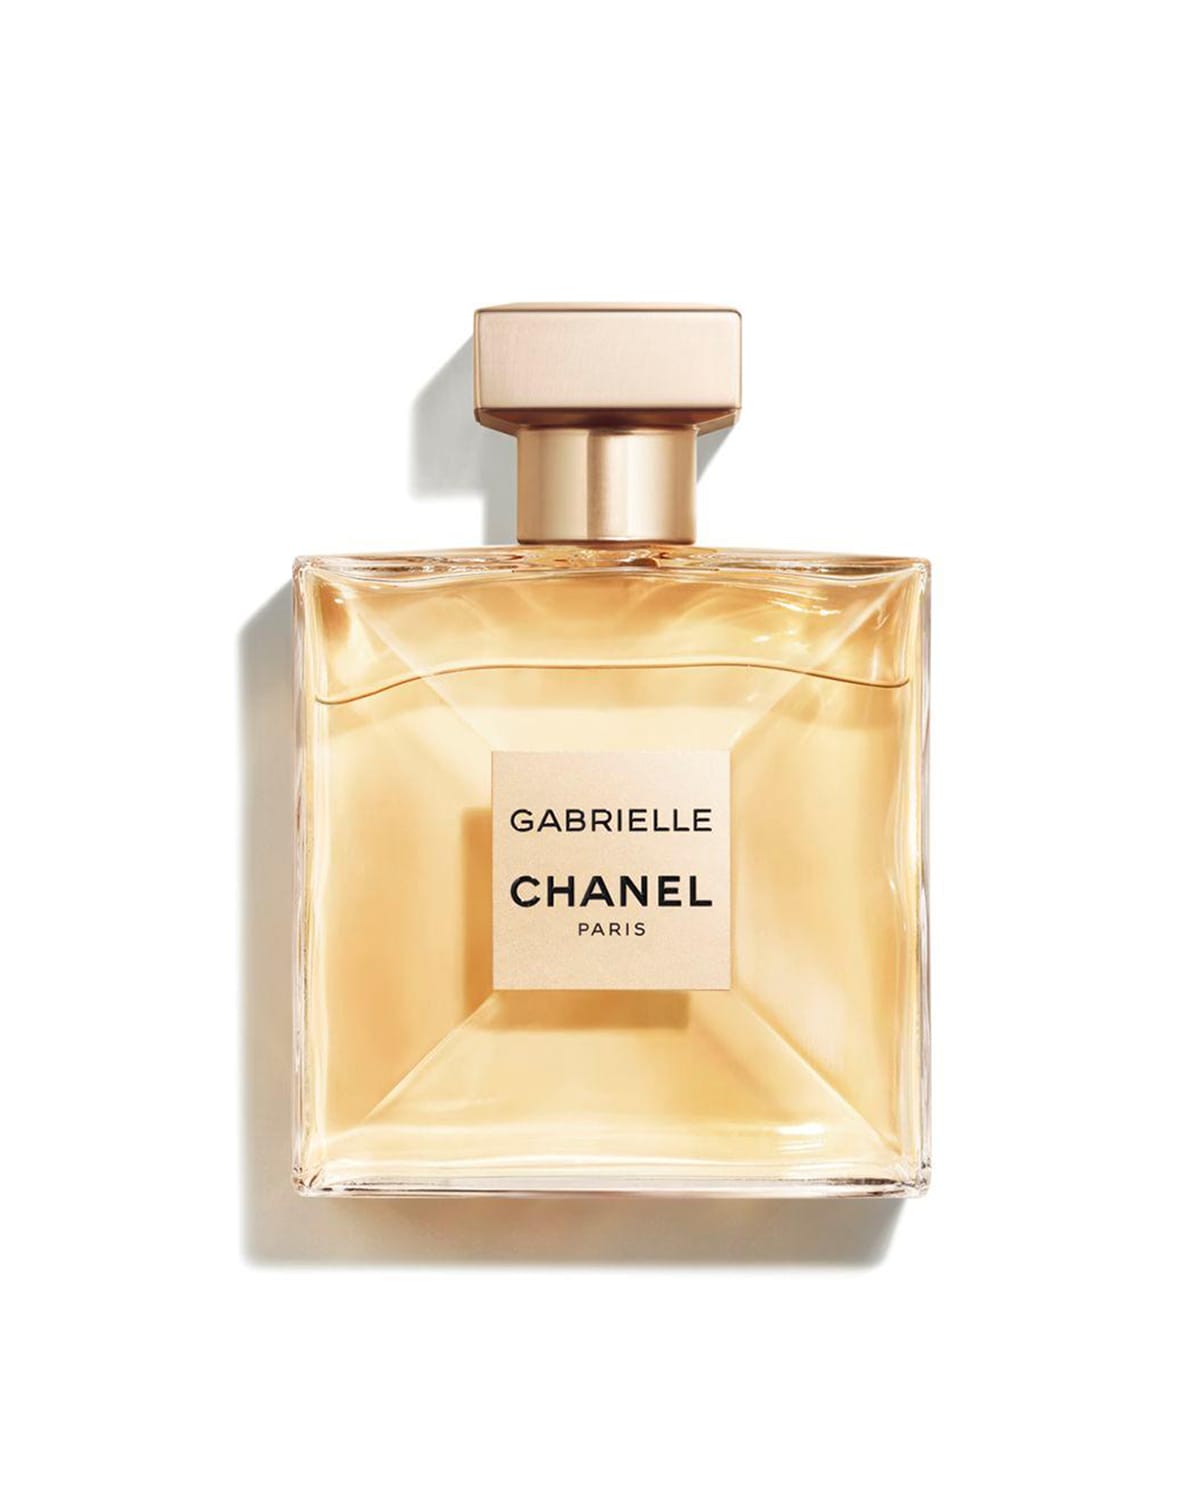 CHANEL GABRIELLE CHANEL EAU DE PARFUM SPRAY & Matching Items